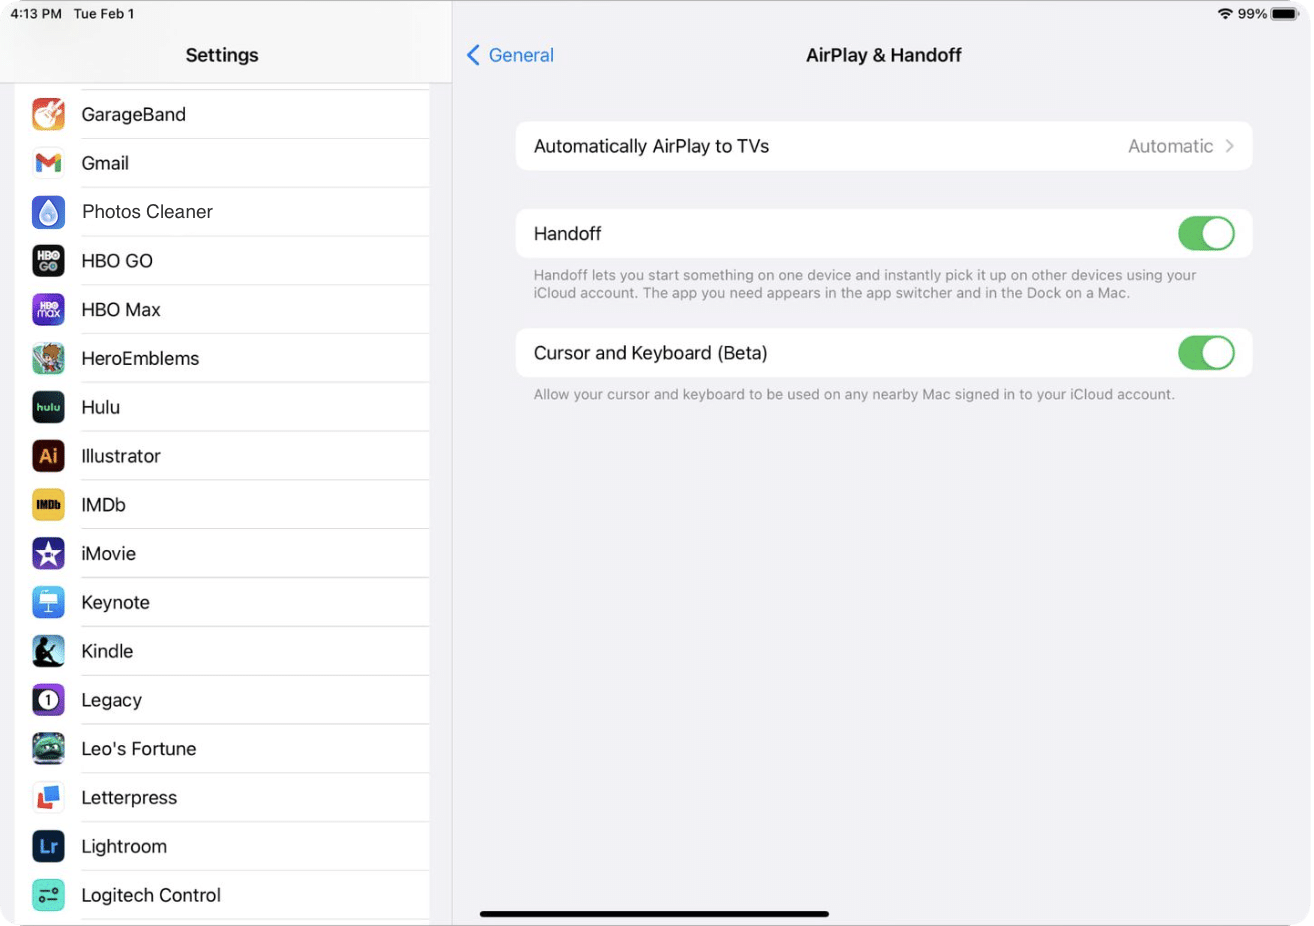 iPad settings showing AirPlay 